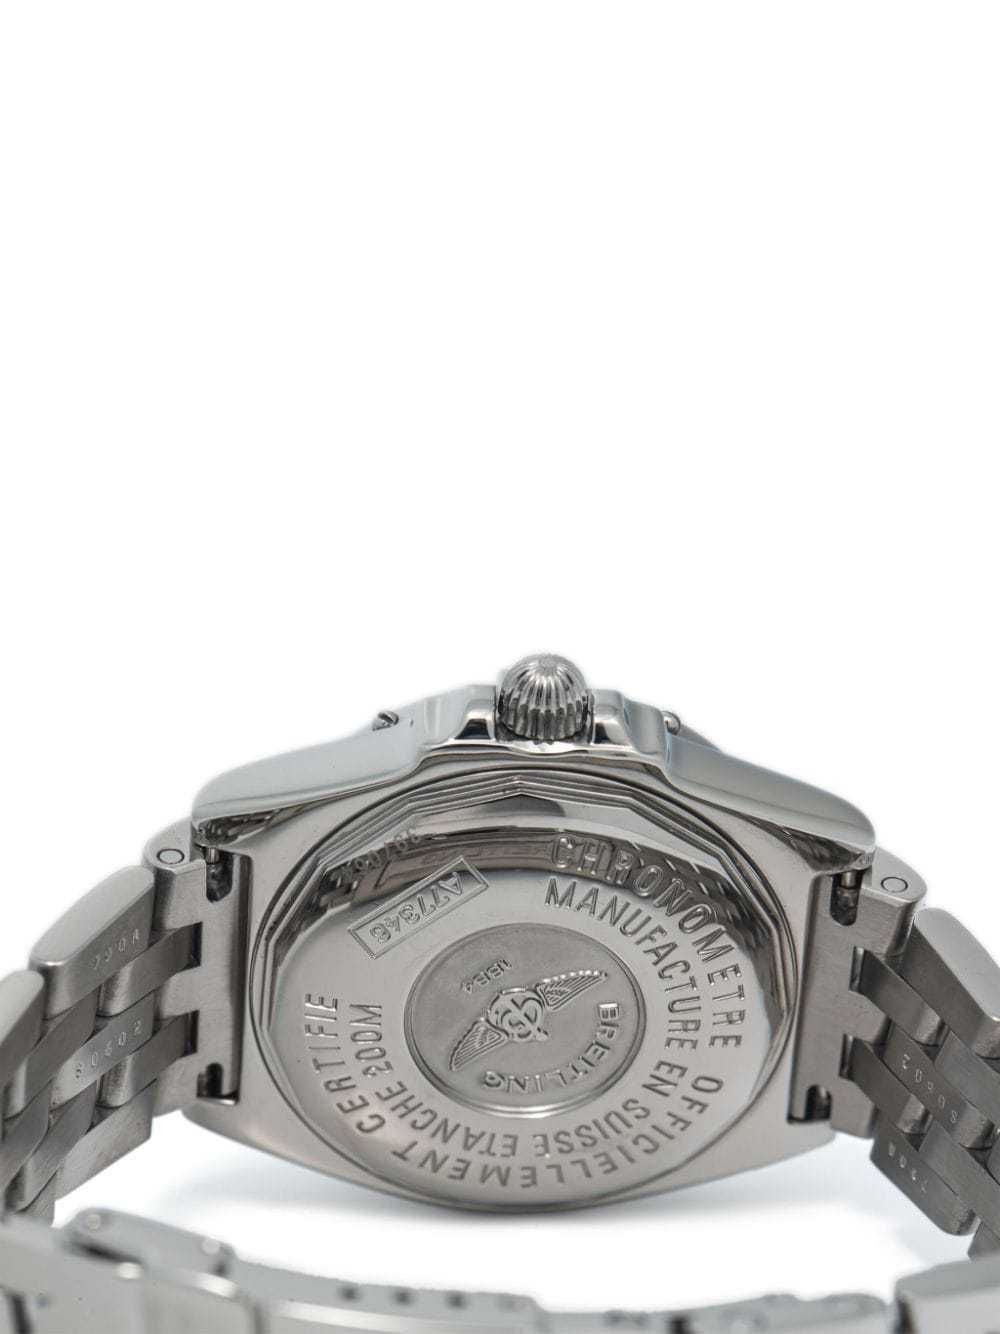 Breitling pre-owned Chronometre 34mm - White - image 4